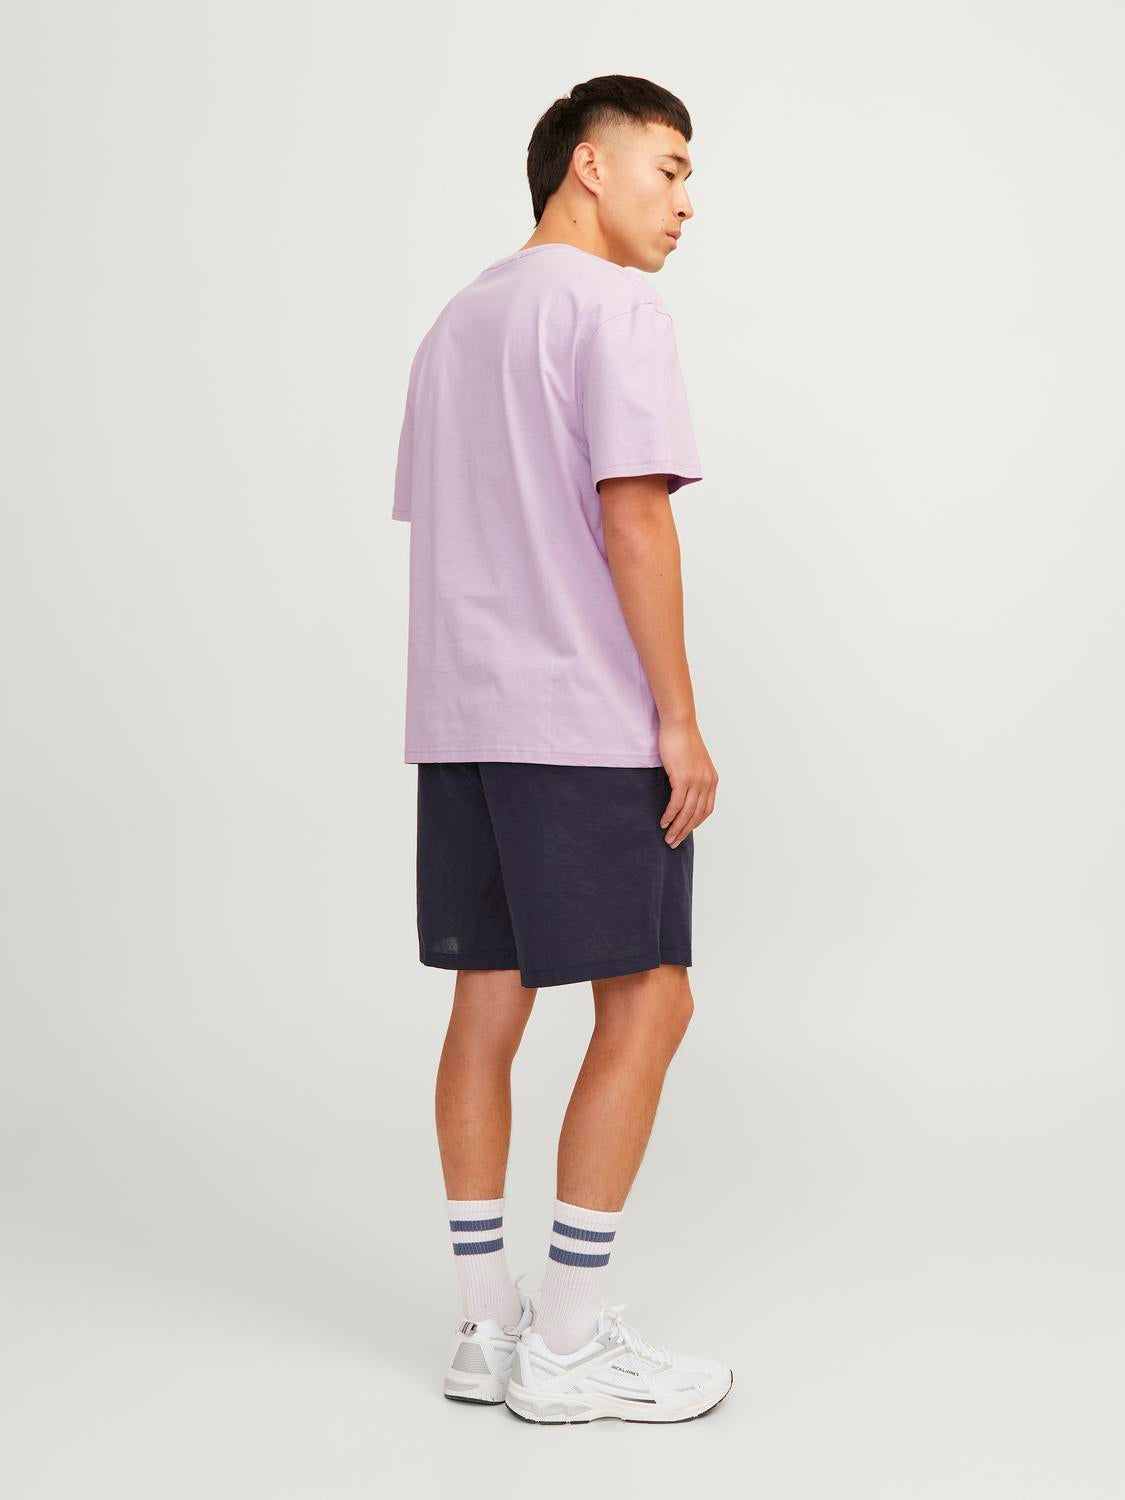 JORMARBELLA T-Shirt - Lavender Frost